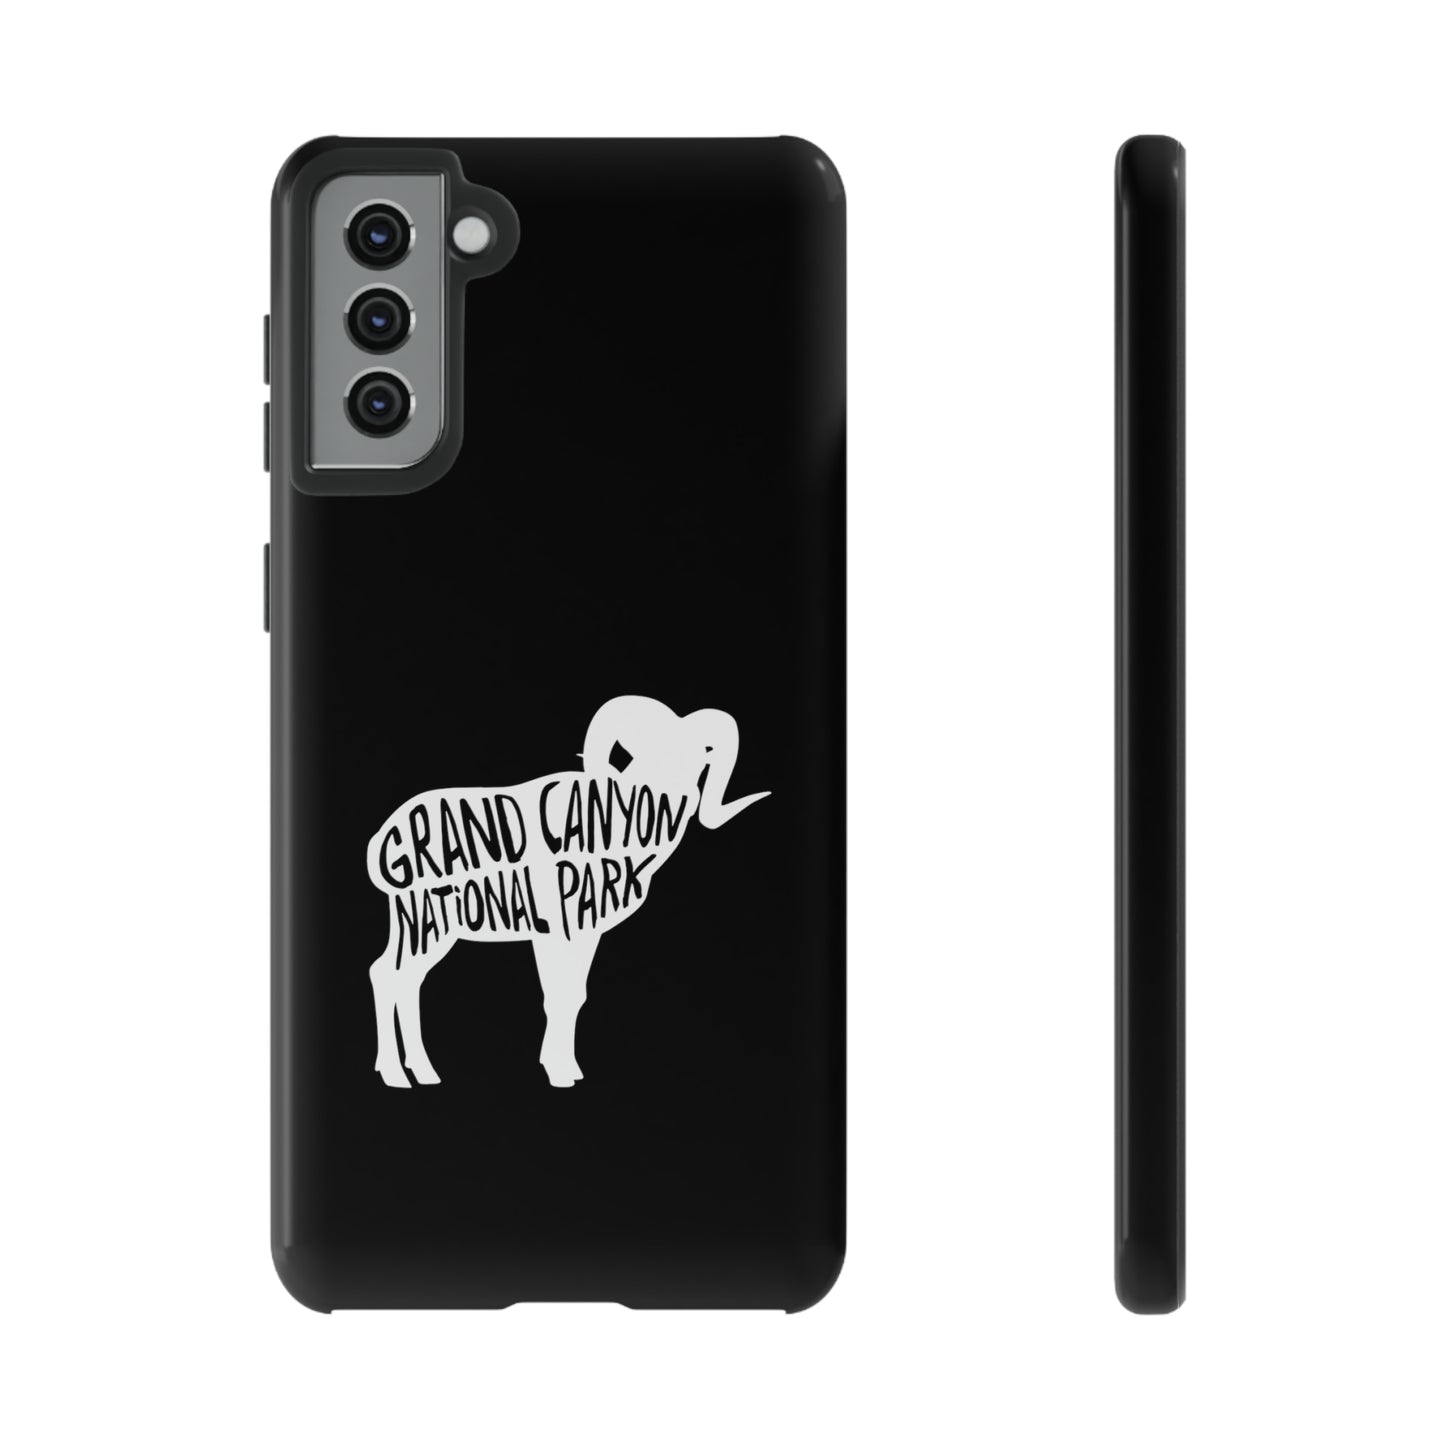 Grand Canyon National Park Phone Case - Bighorn Sheep Design